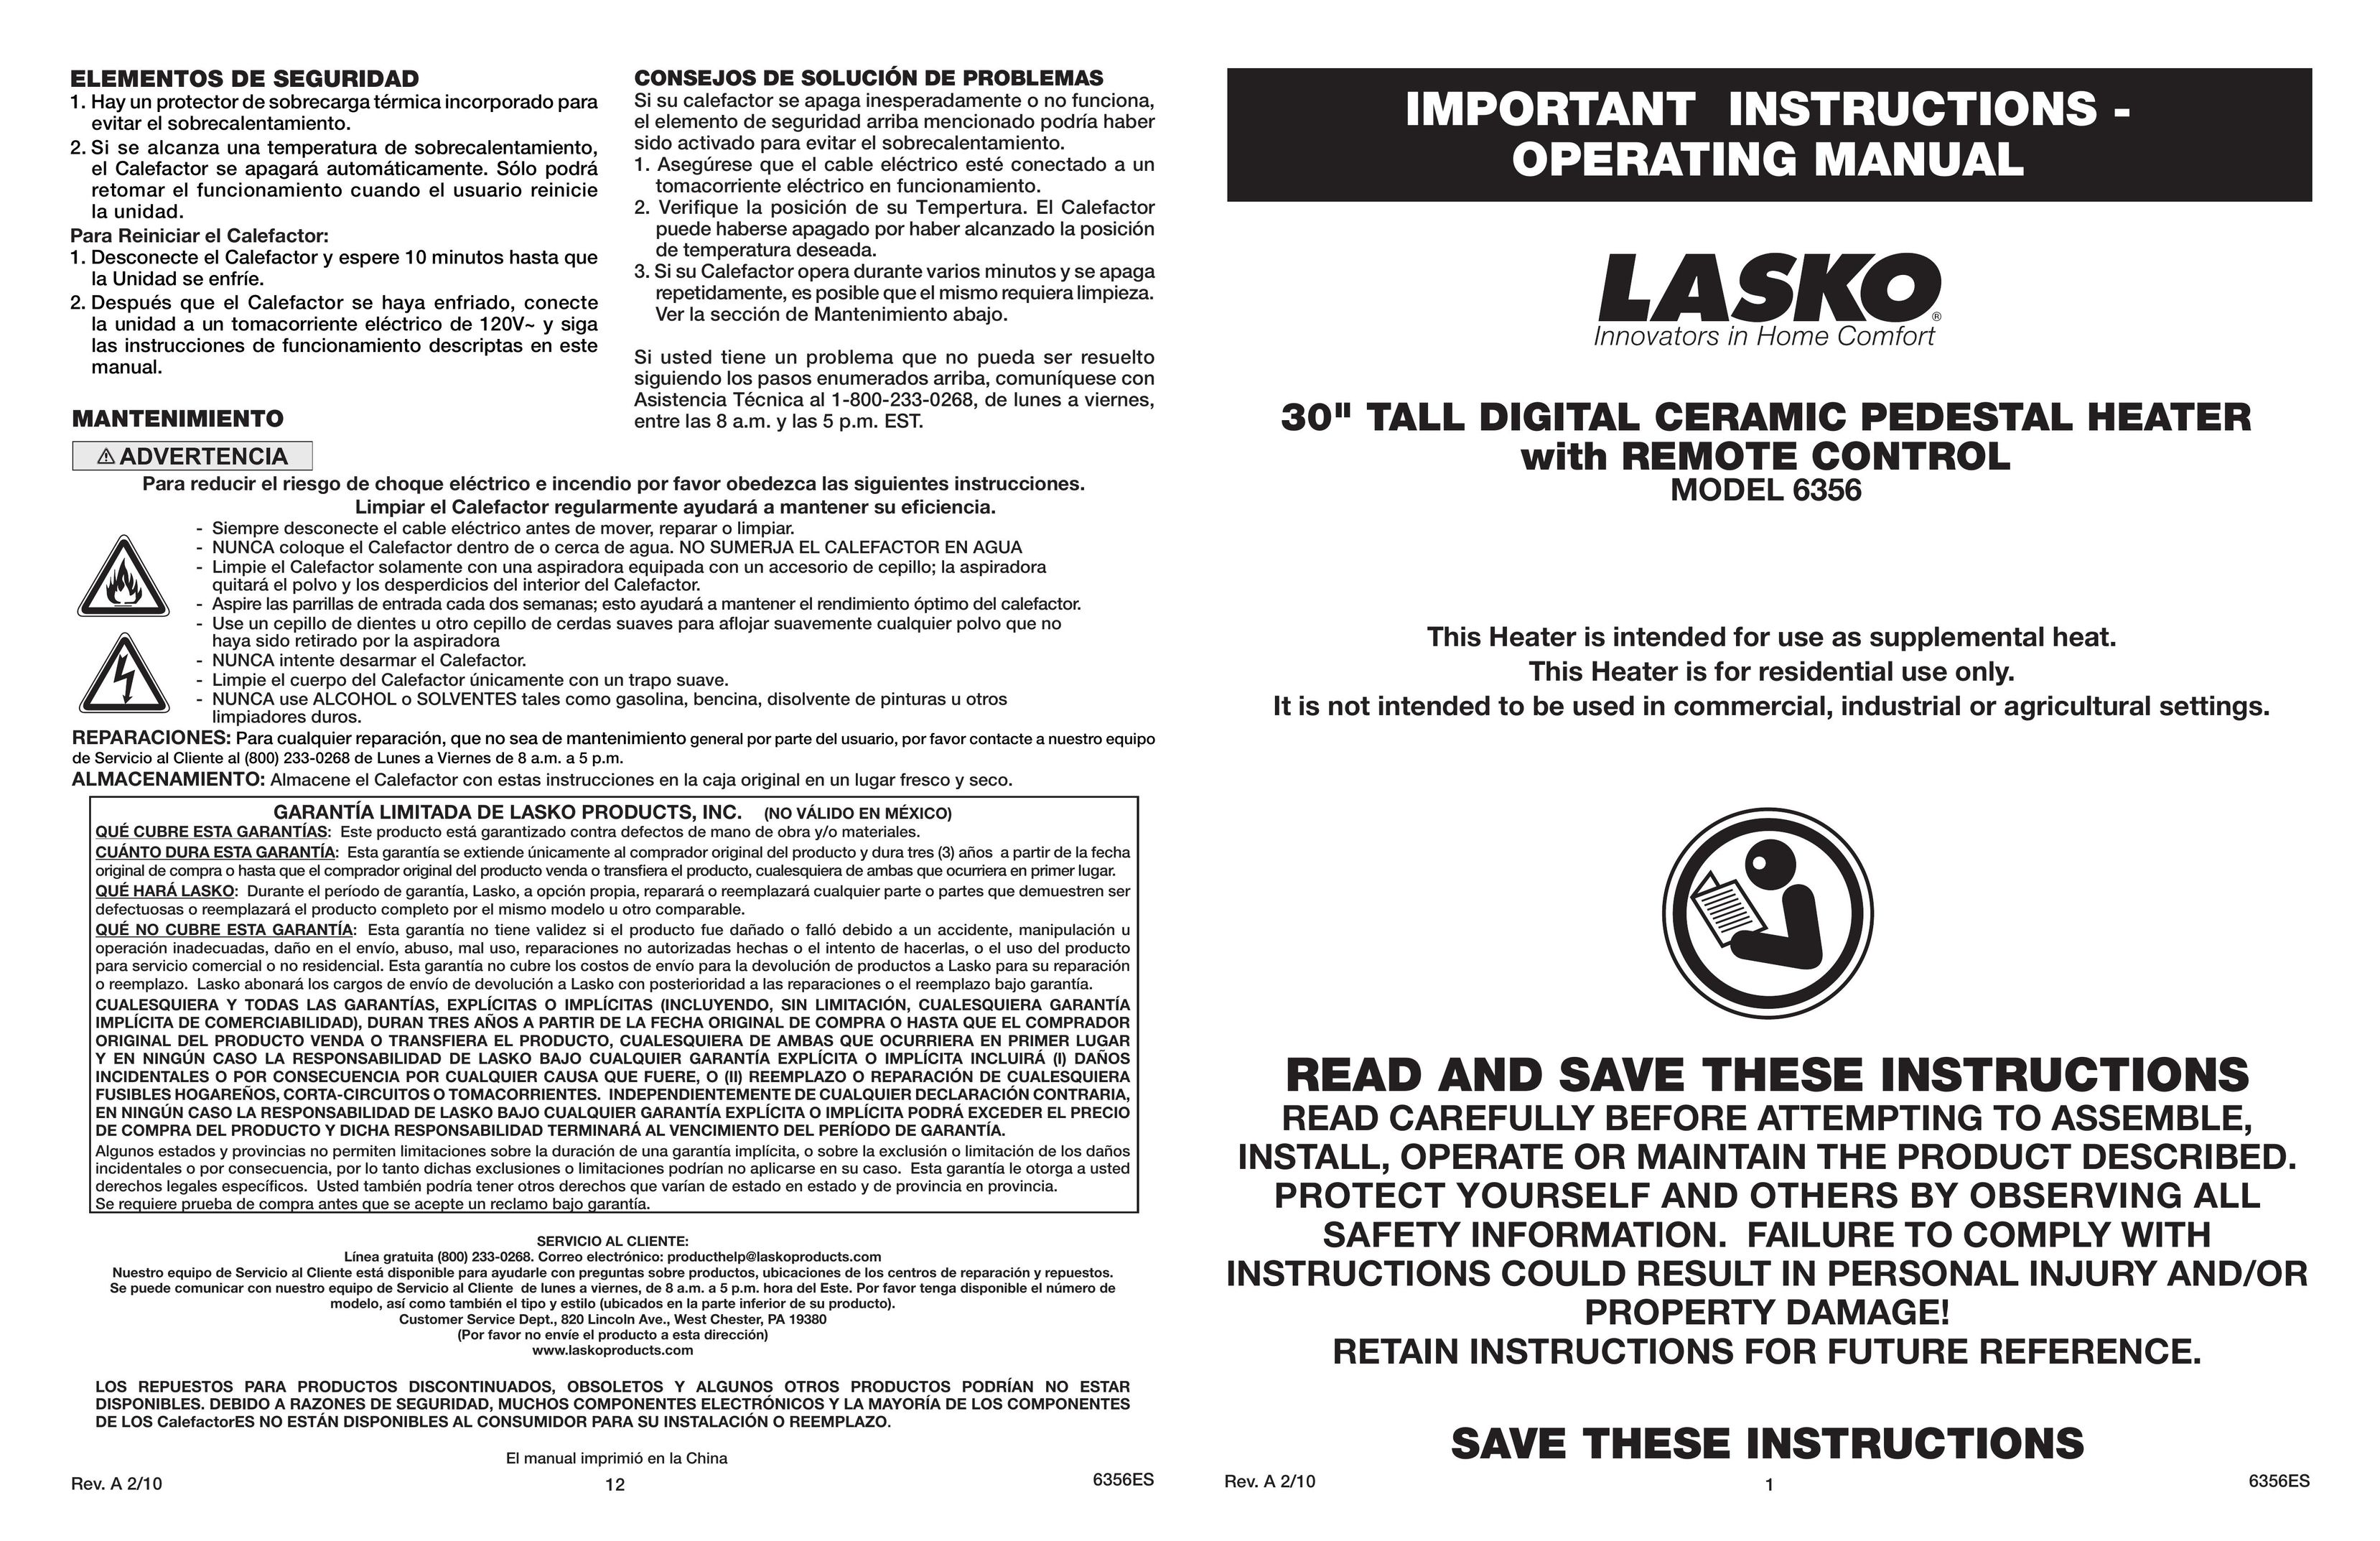 Lasko 6356 Electric Heater User Manual